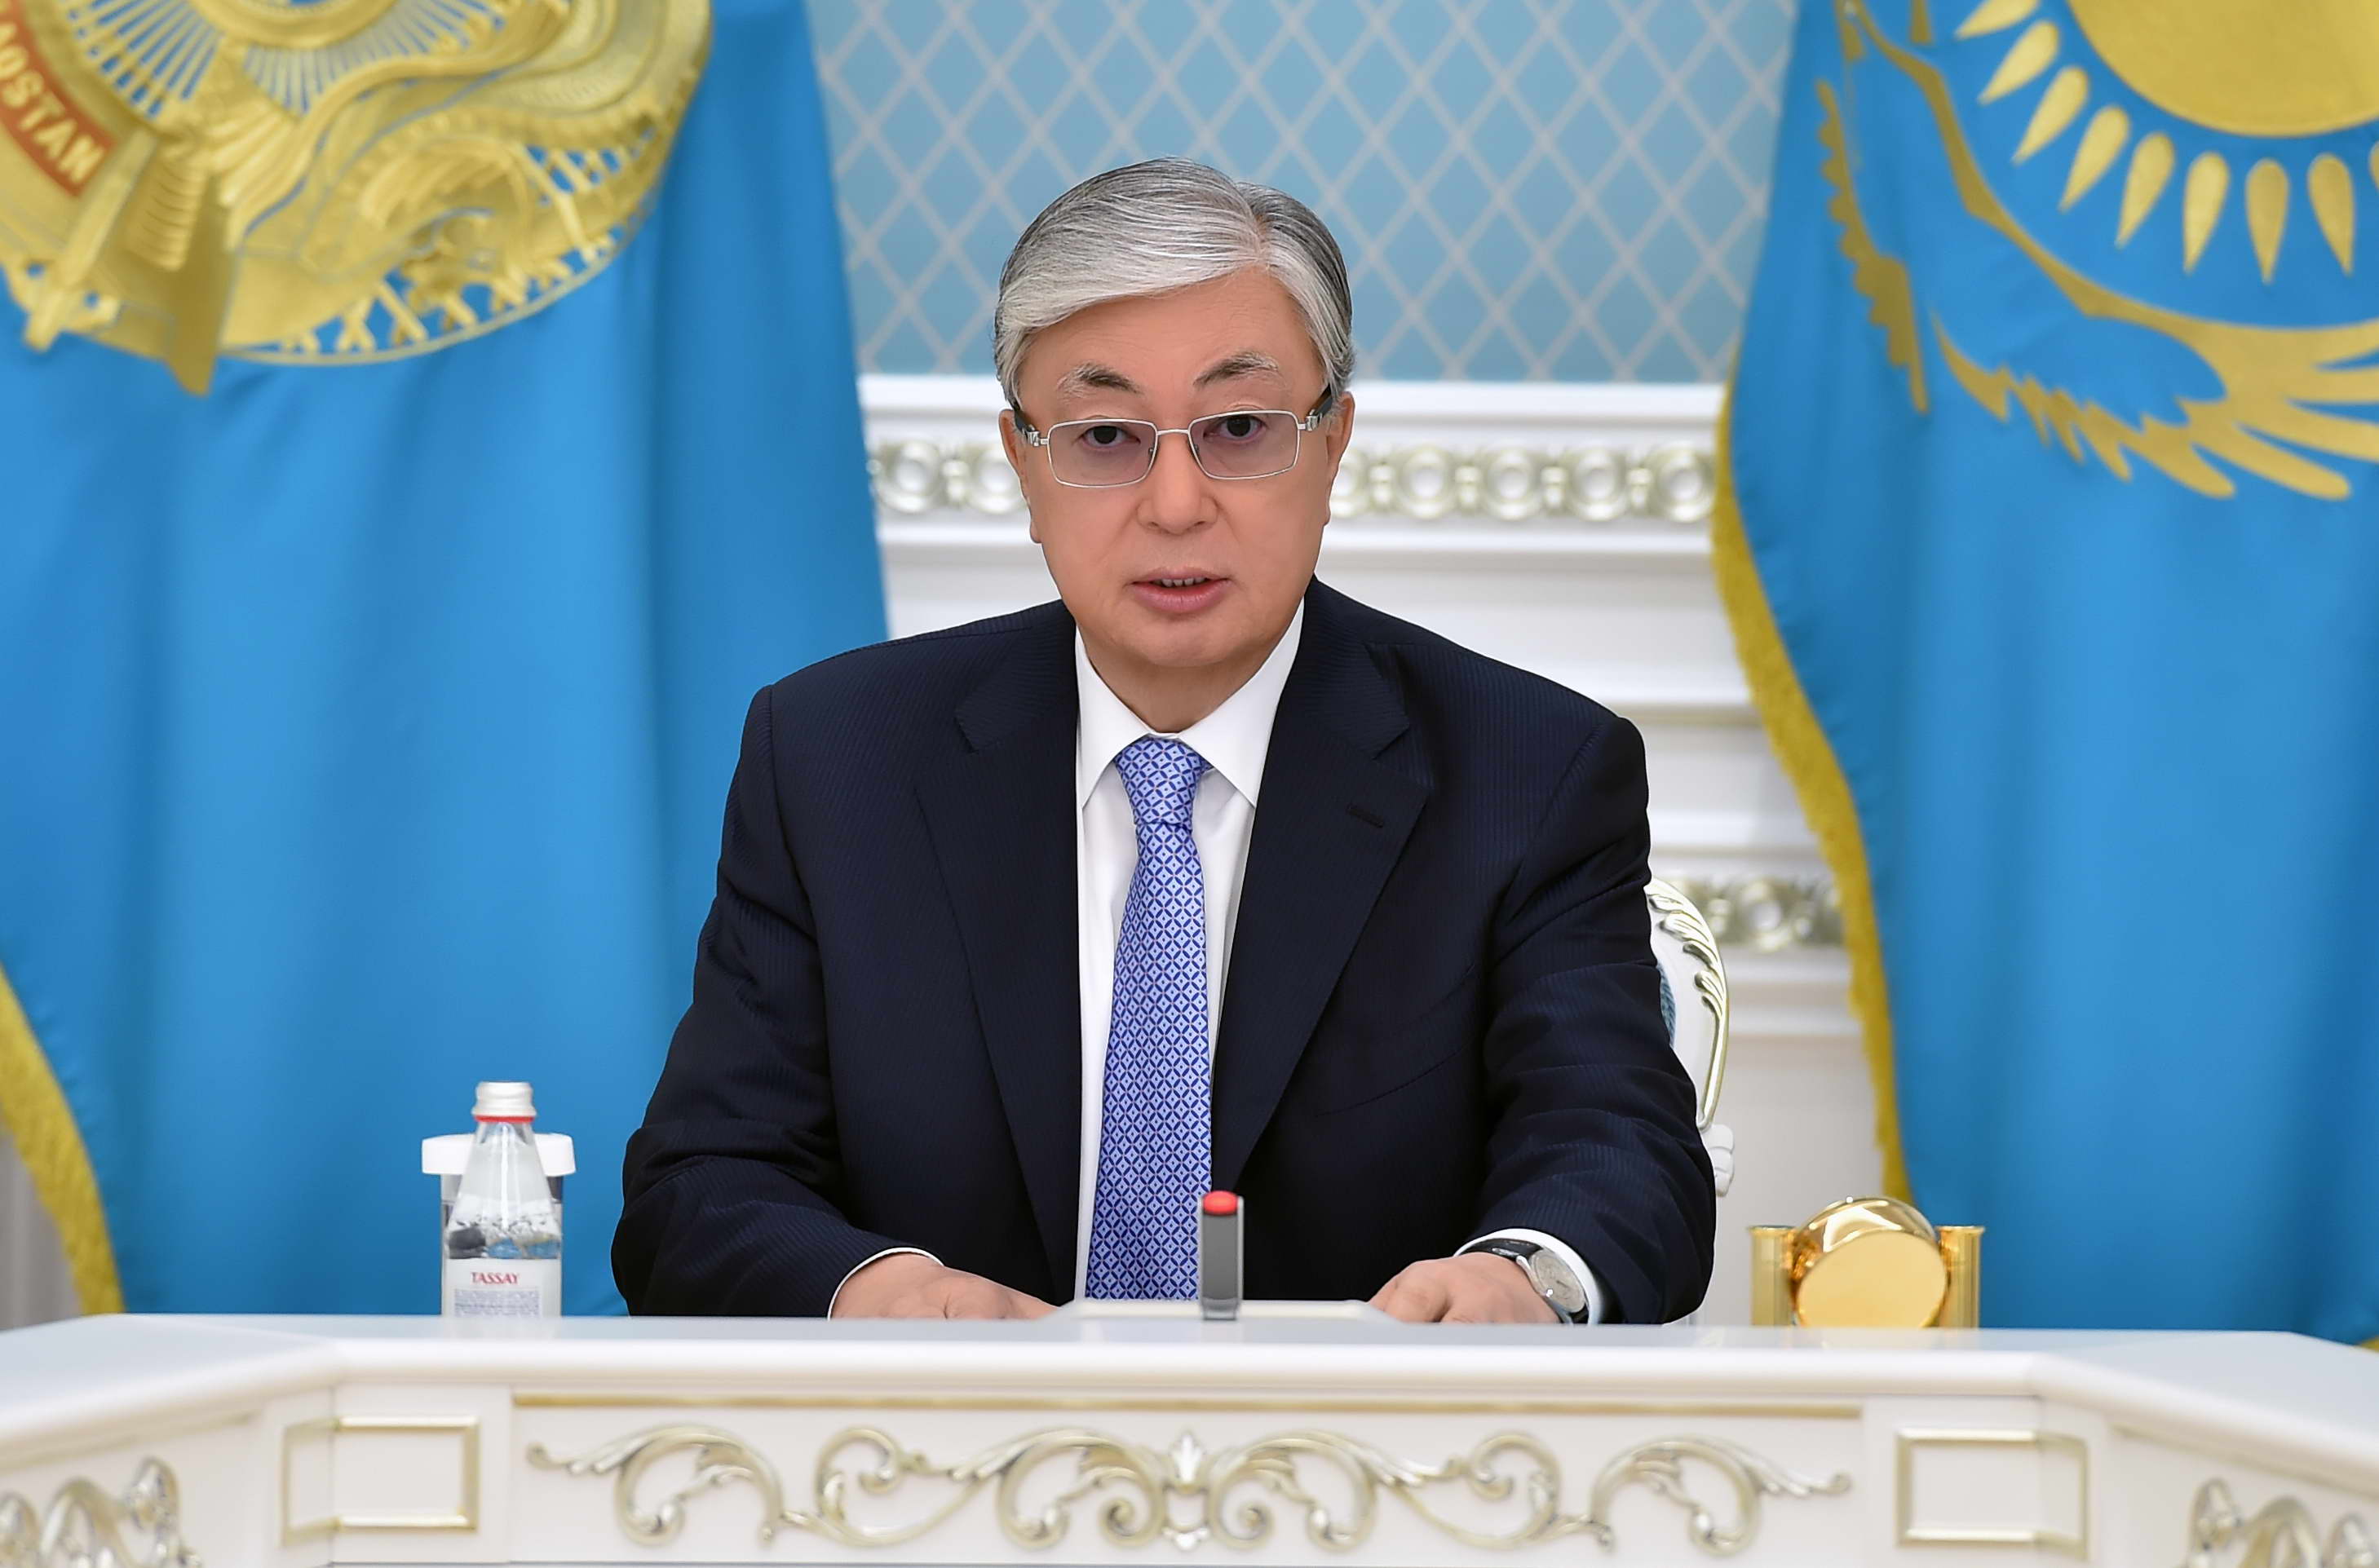 Kazakh President expresses condolences over the plane crash near Tehran